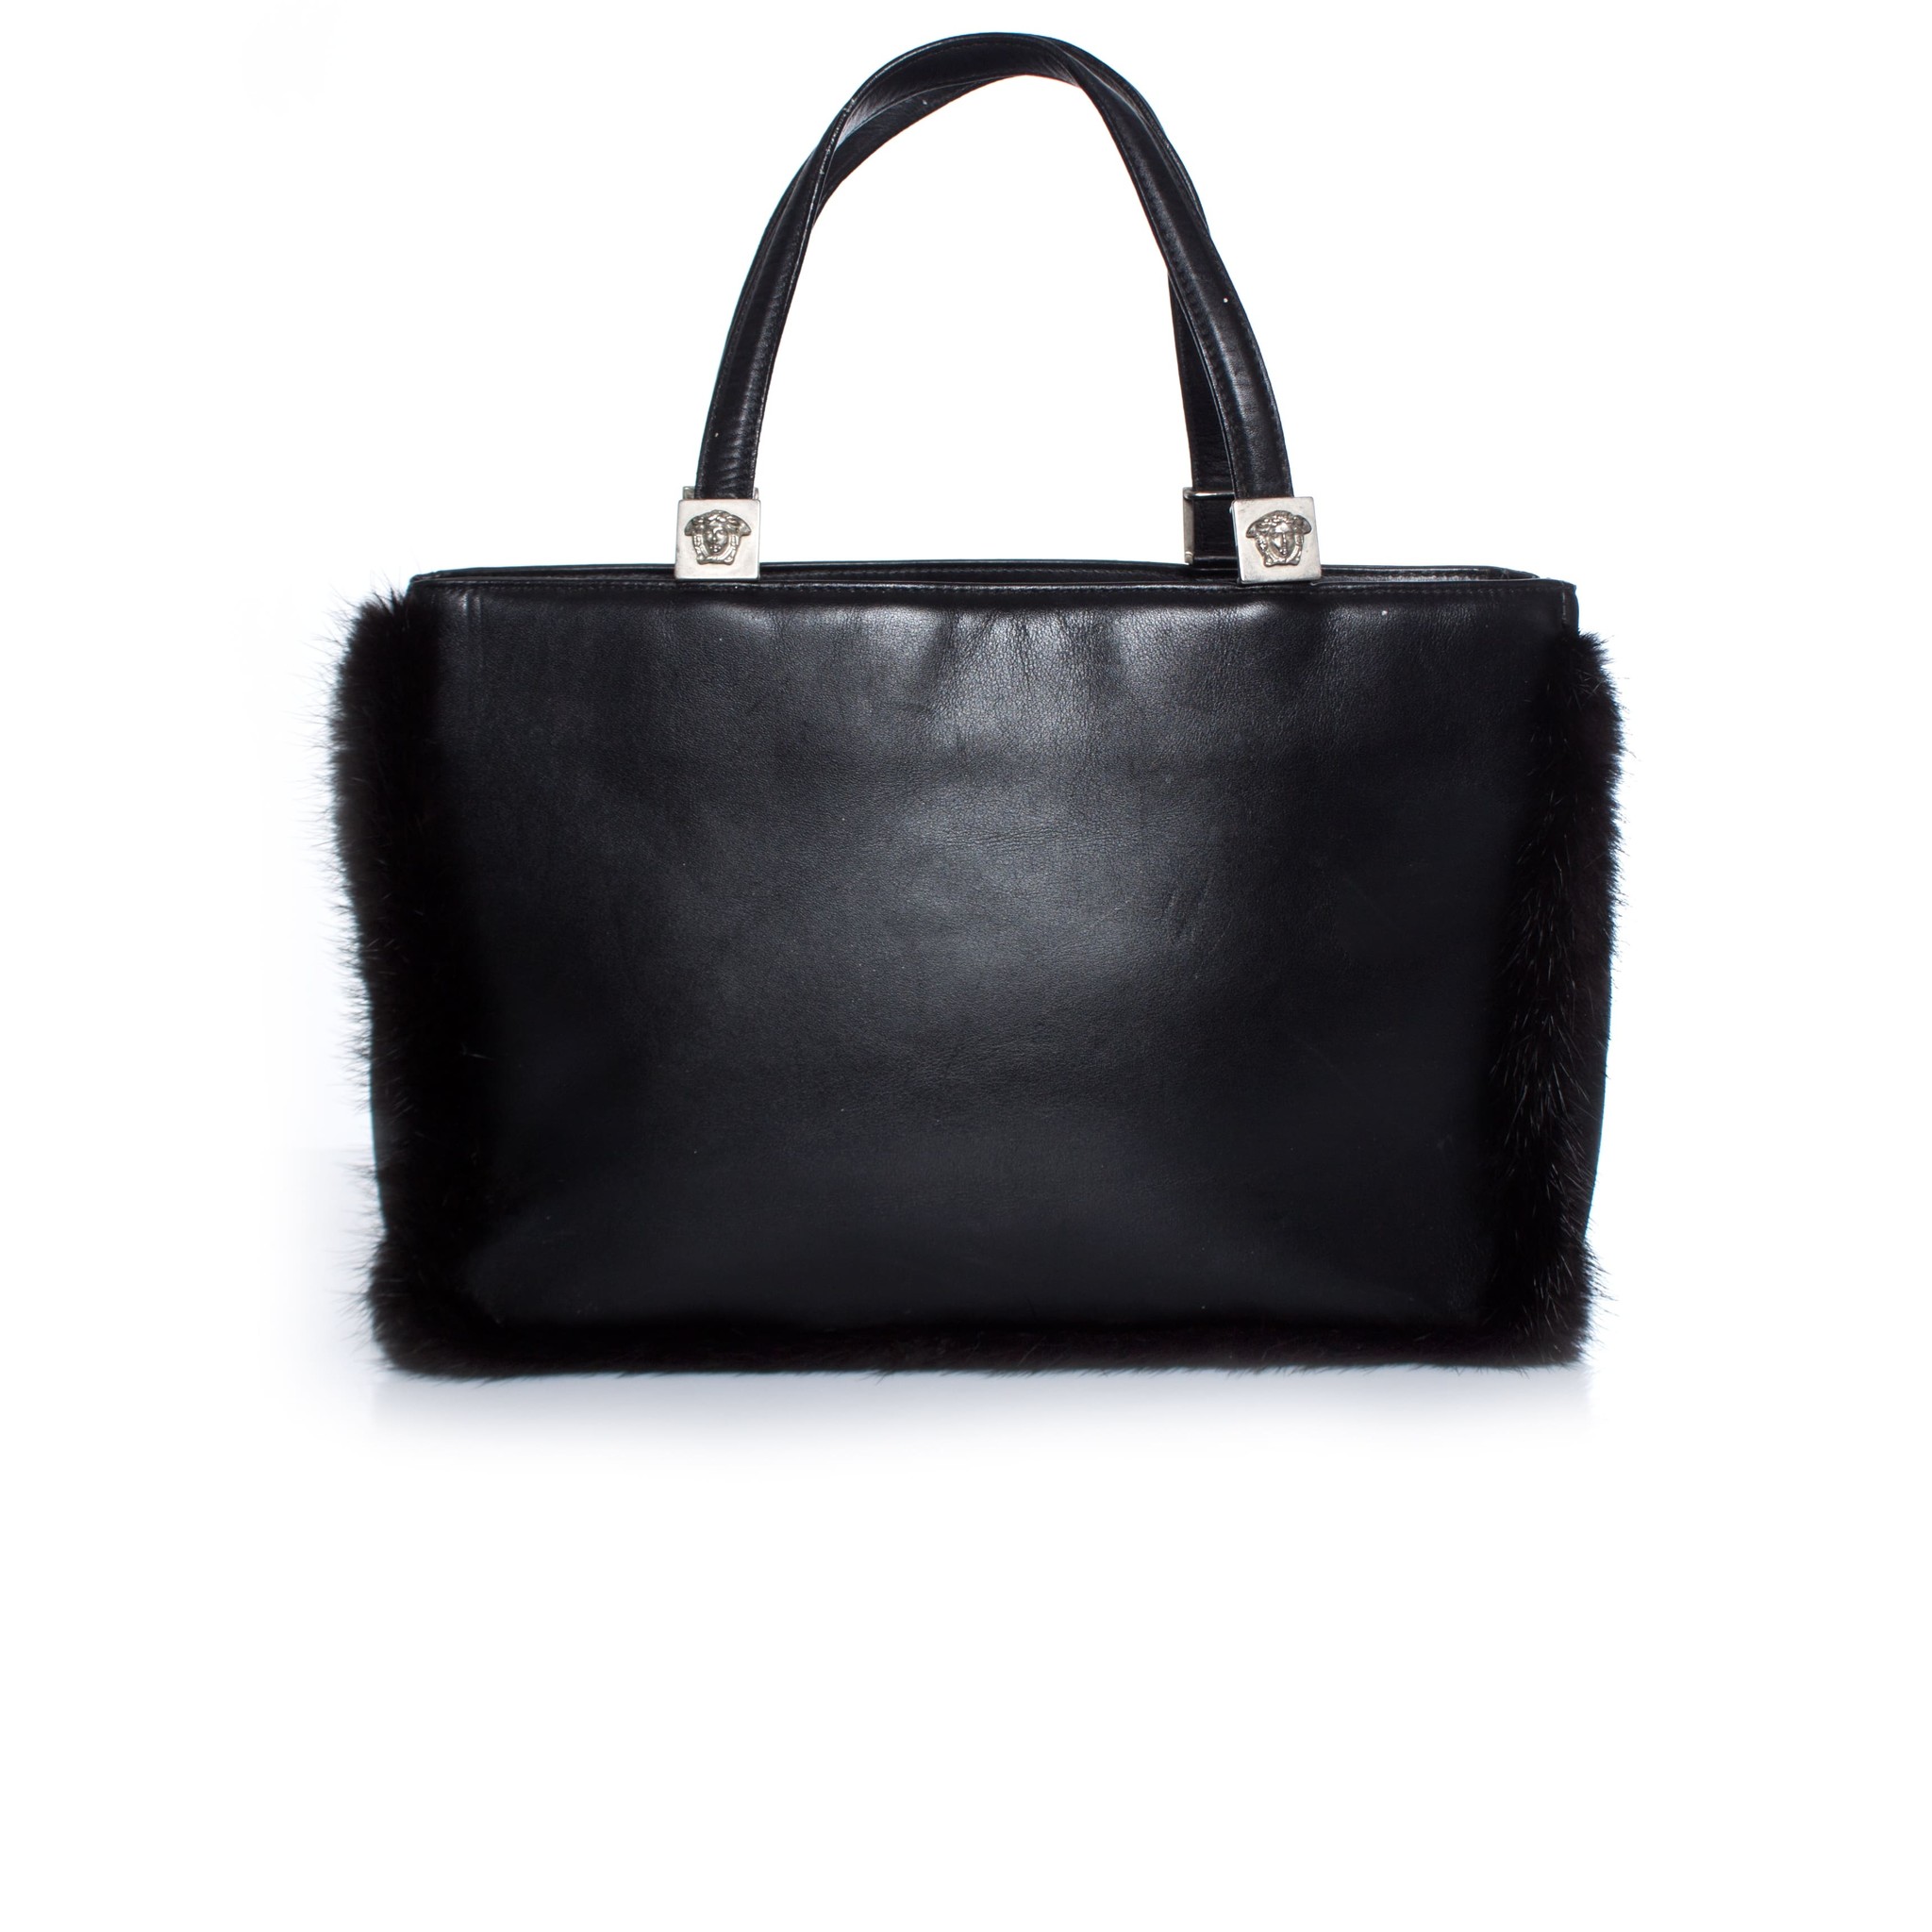 ultimate beautiful goods GIANNI VERSACE Gianni Versace handbag tote bag  mete.-sa studs Gold metal fittings shoulder .. all leather black black :  Real Yahoo auction salling